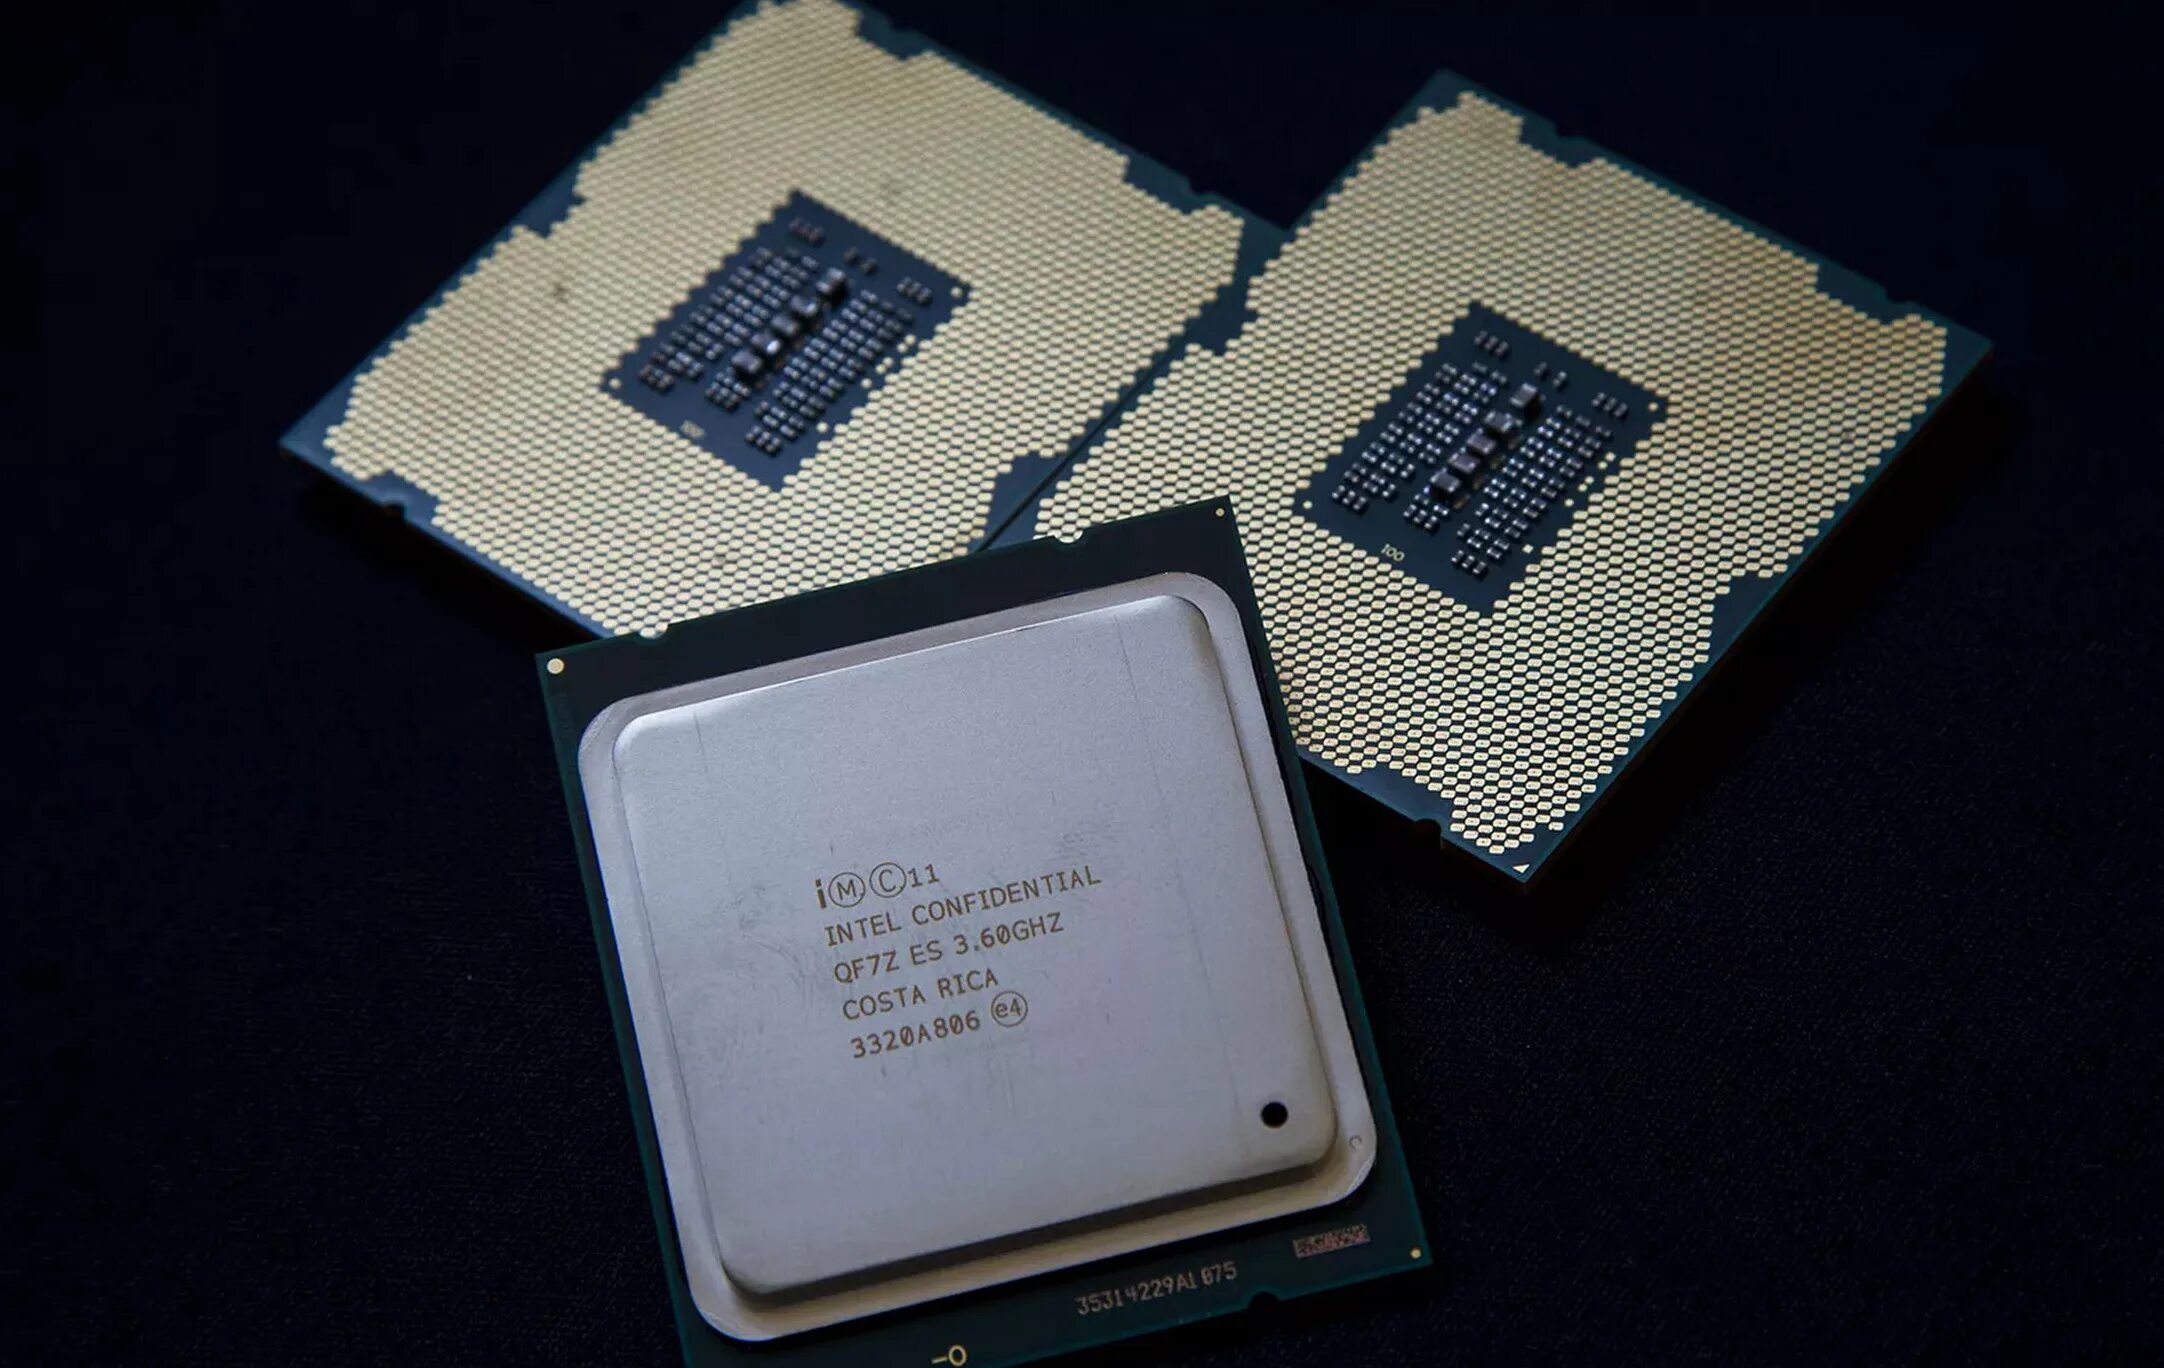 Процессор Intel Core i5-5675c Broadwell. Intel Core i7-5775c. Процессор Intel Core i7 12700k. Поколения процессоров Intel Core i7.